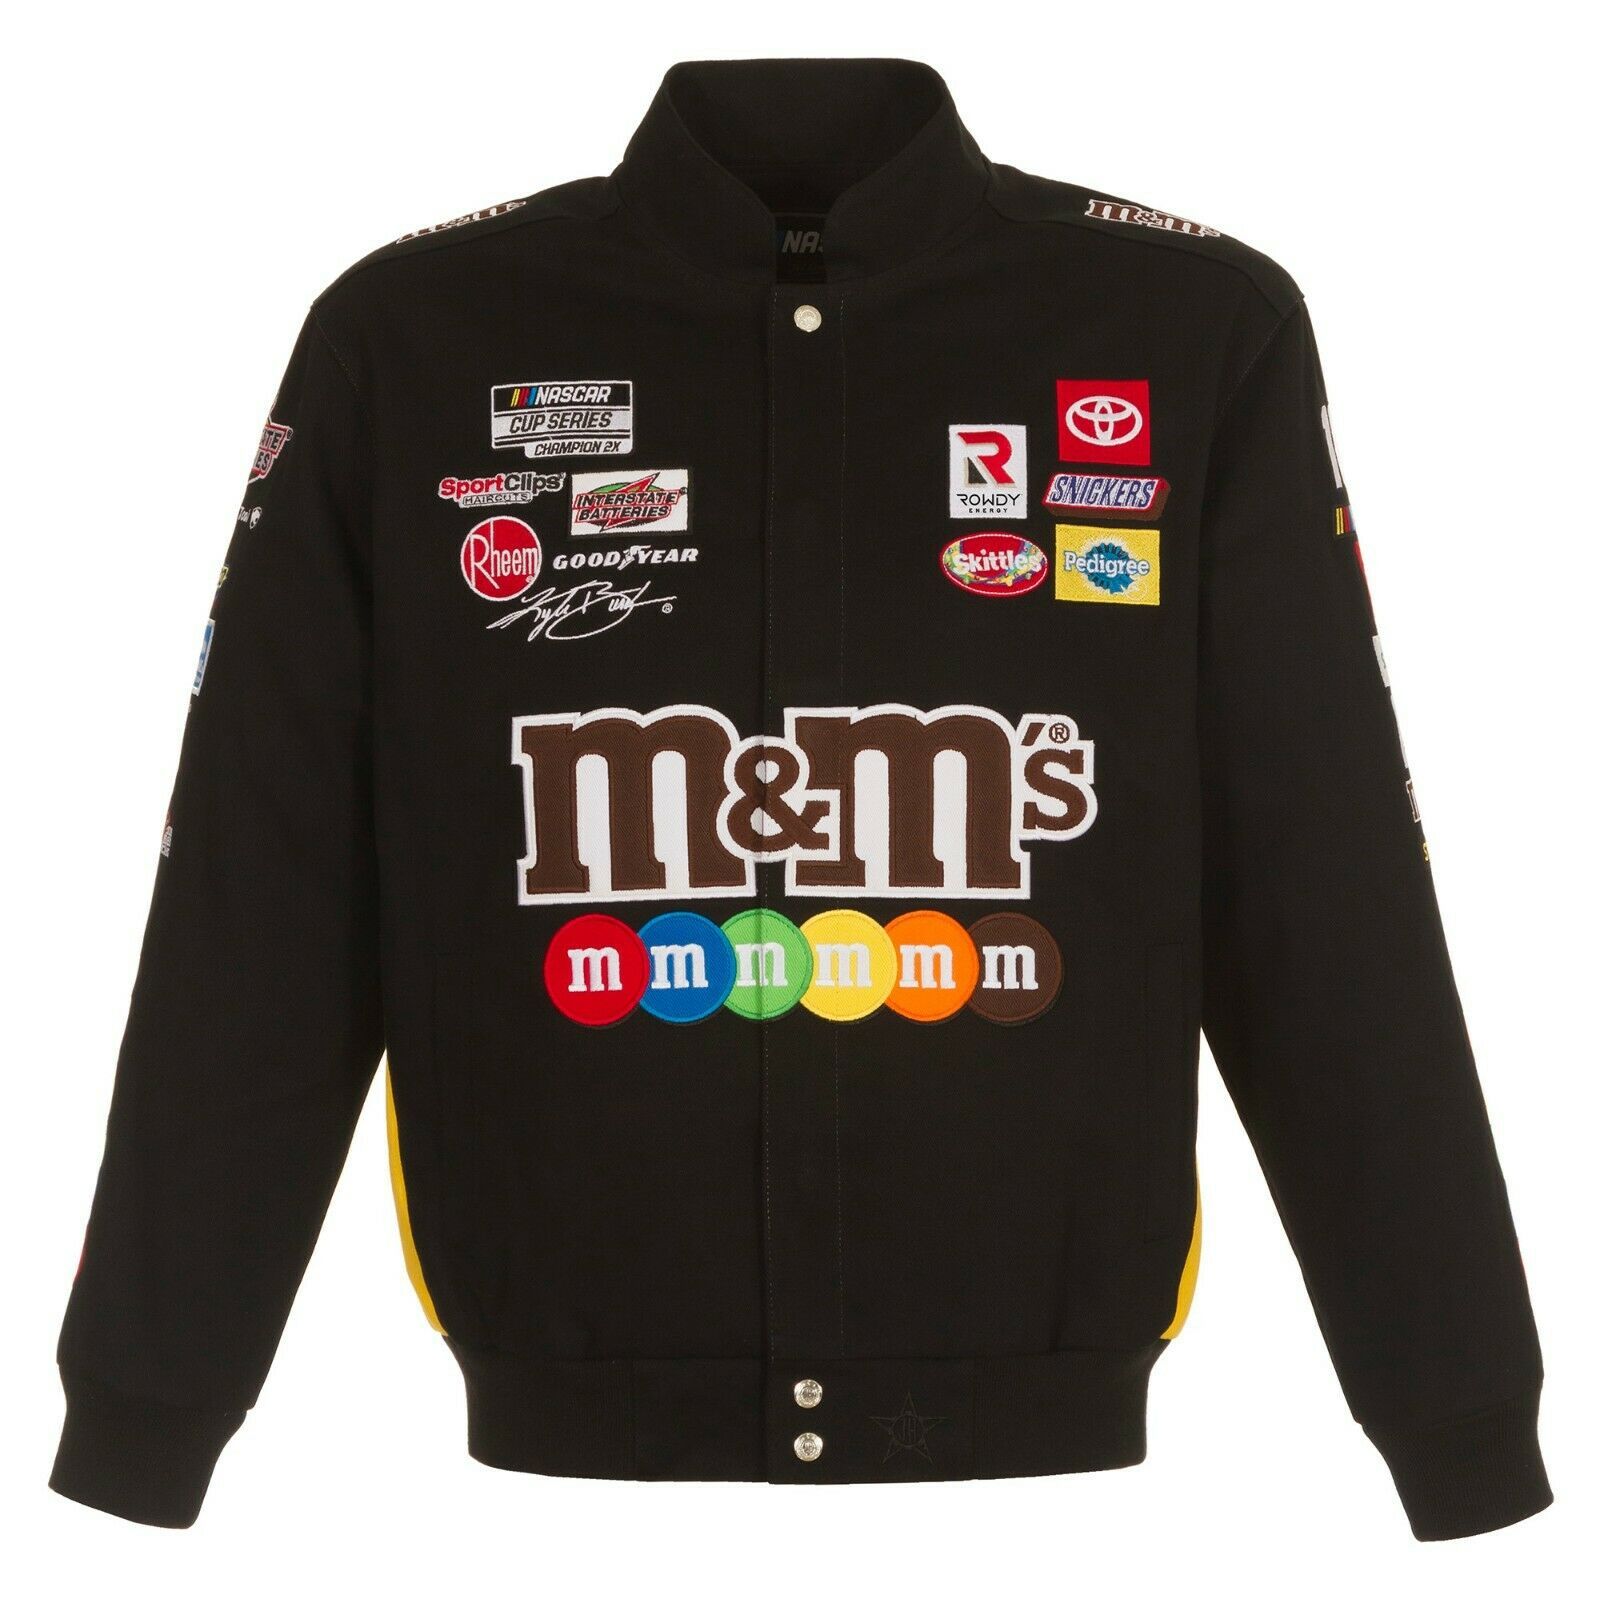 Primary image for  Authentic Nascar Kyle Busch JH Design M&M's Snap Black Cotton Jacket 